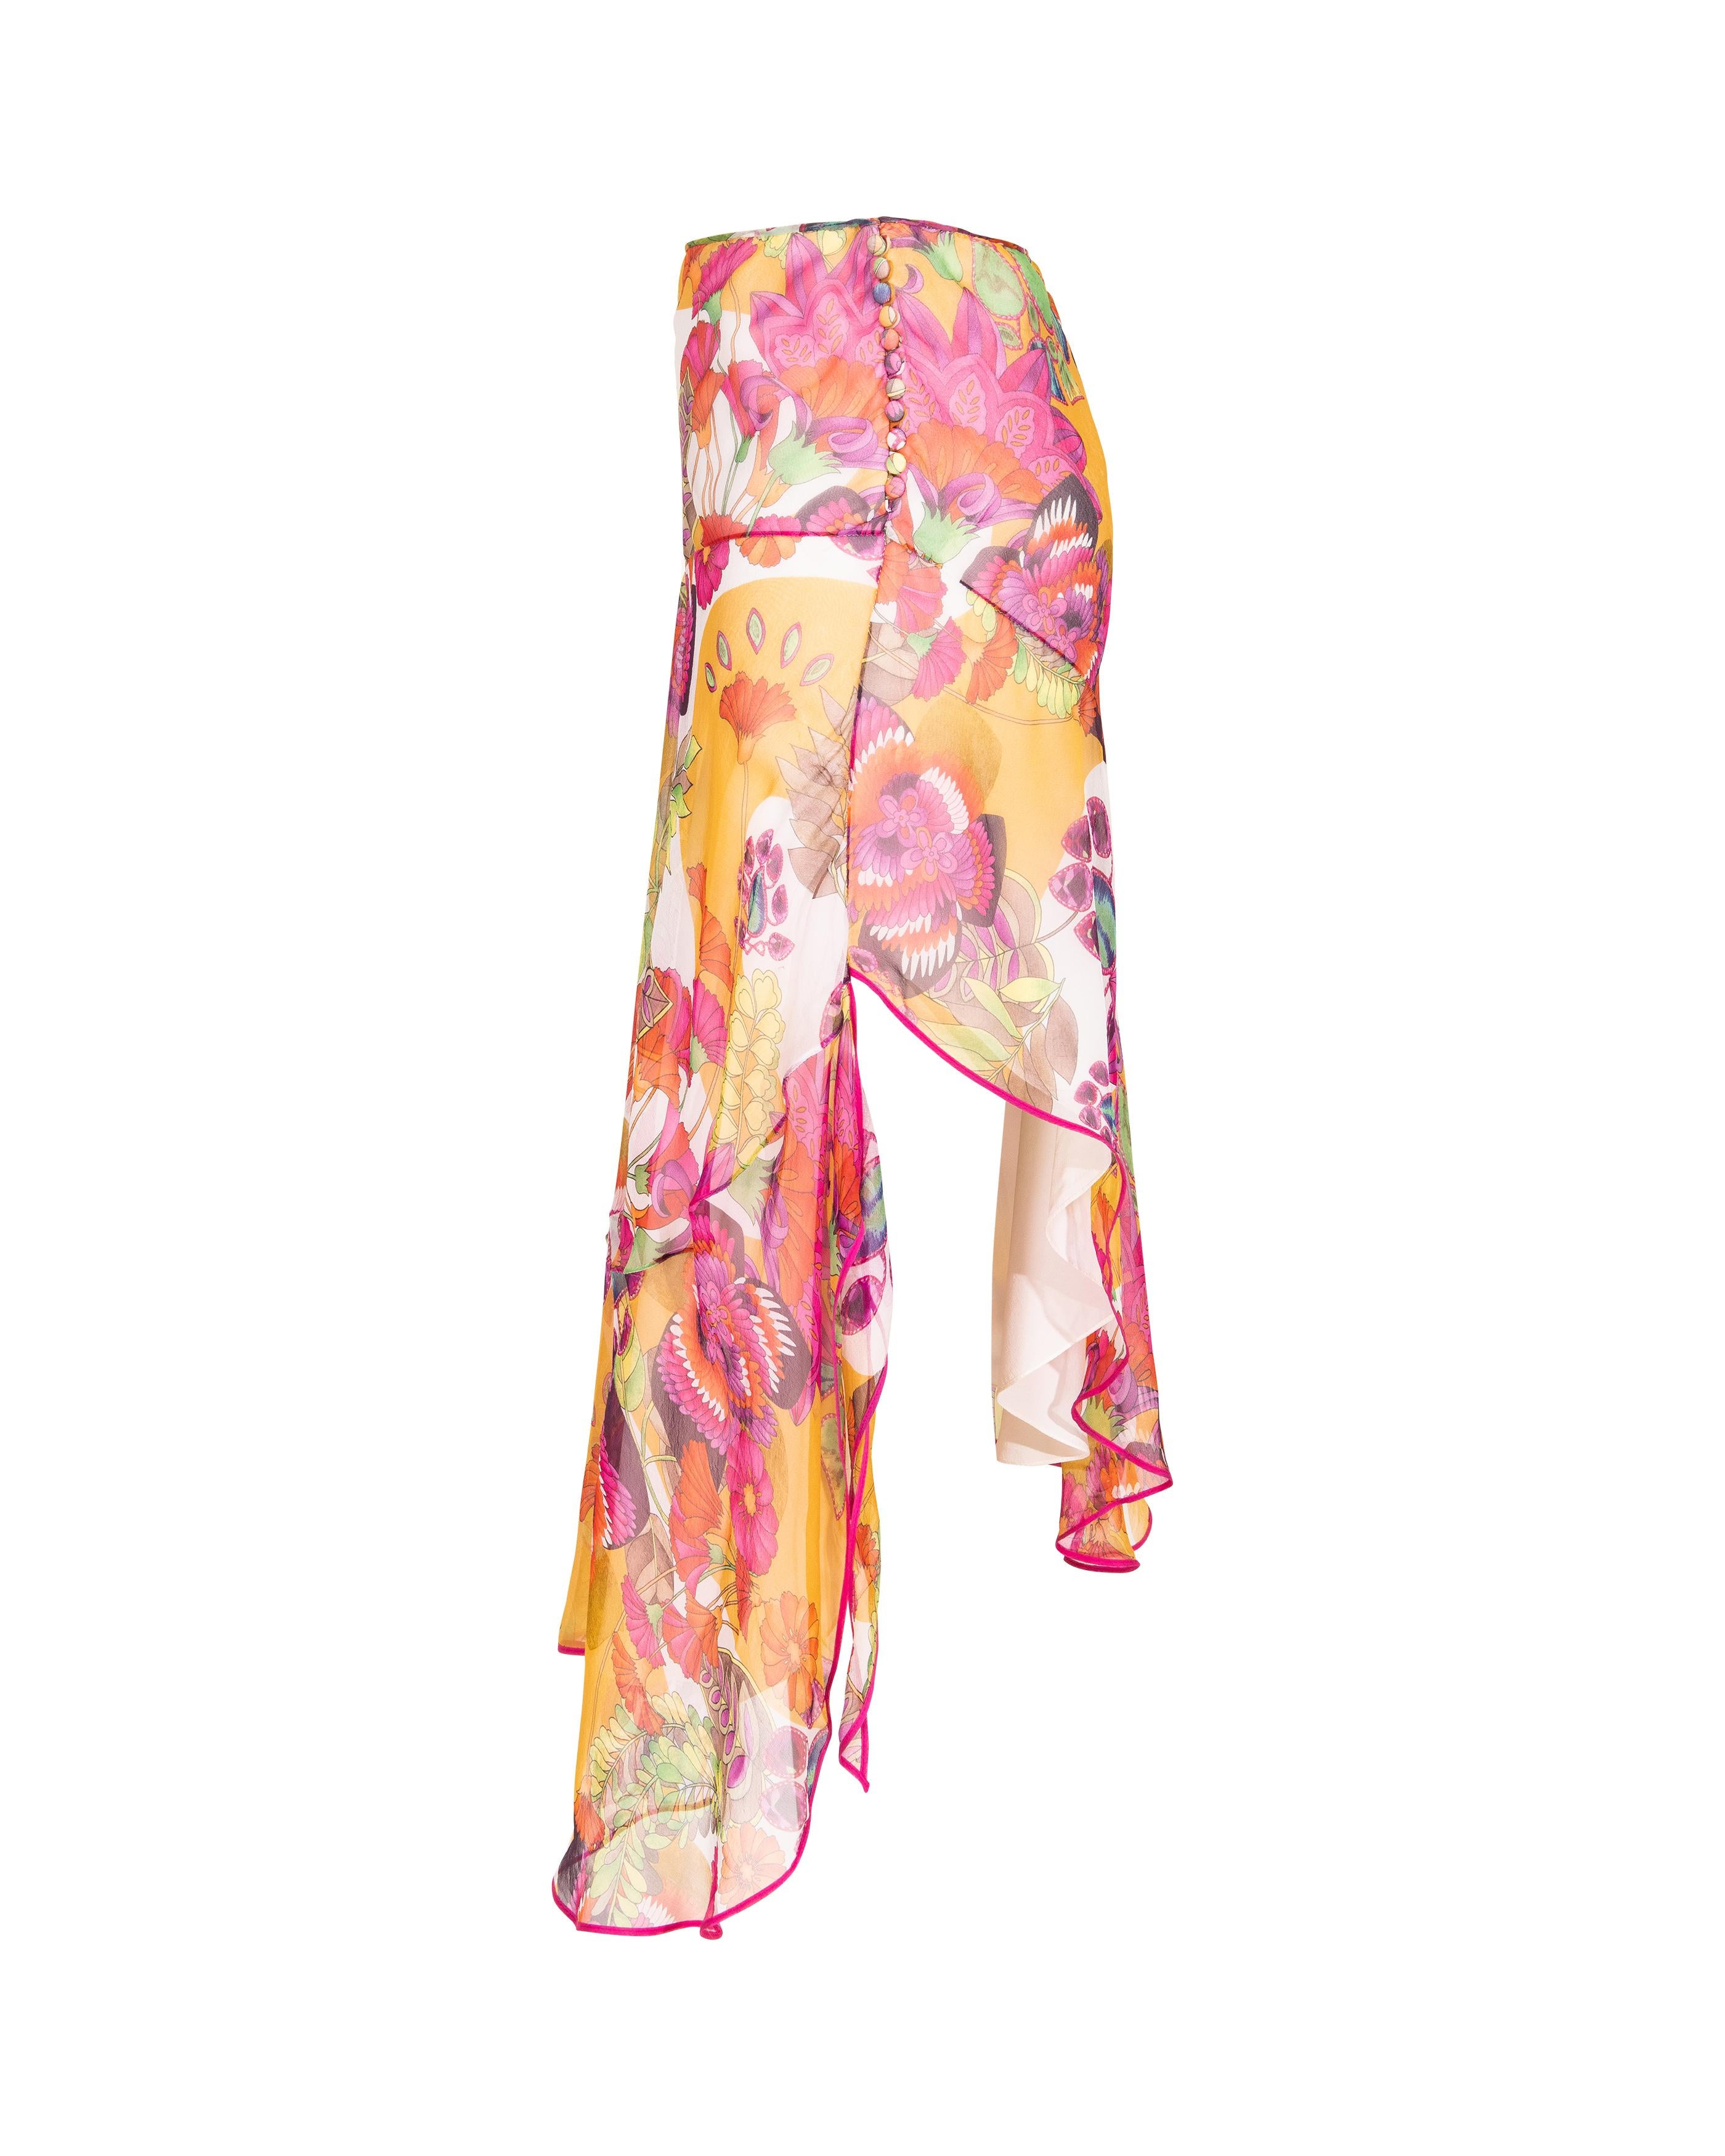 S/S 2005 Christian Dior by John Galliano Floral Print Asymmetrical Silk Skirt 1